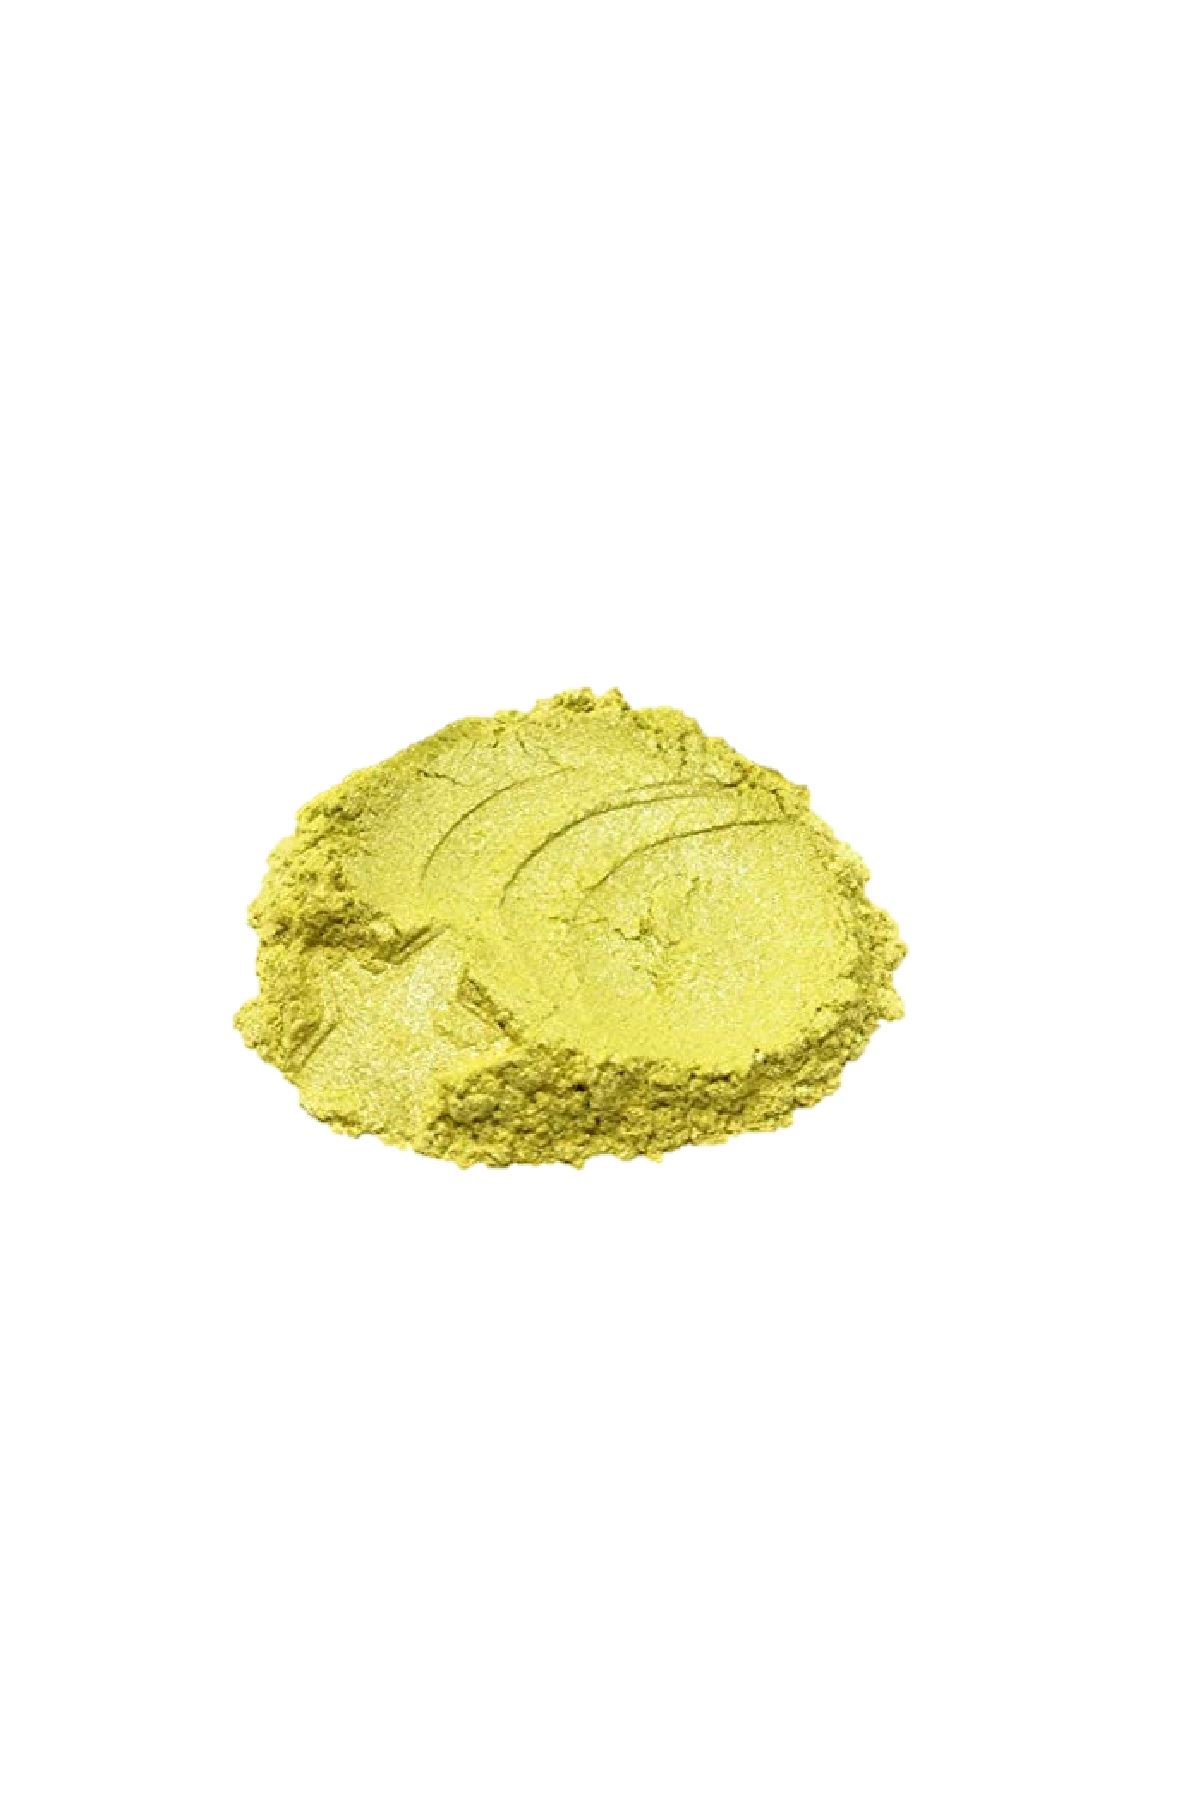 Brtr 10 Gr Lemonade Gold Epoksi Metalik Toz Pigment(Limon Sarı)